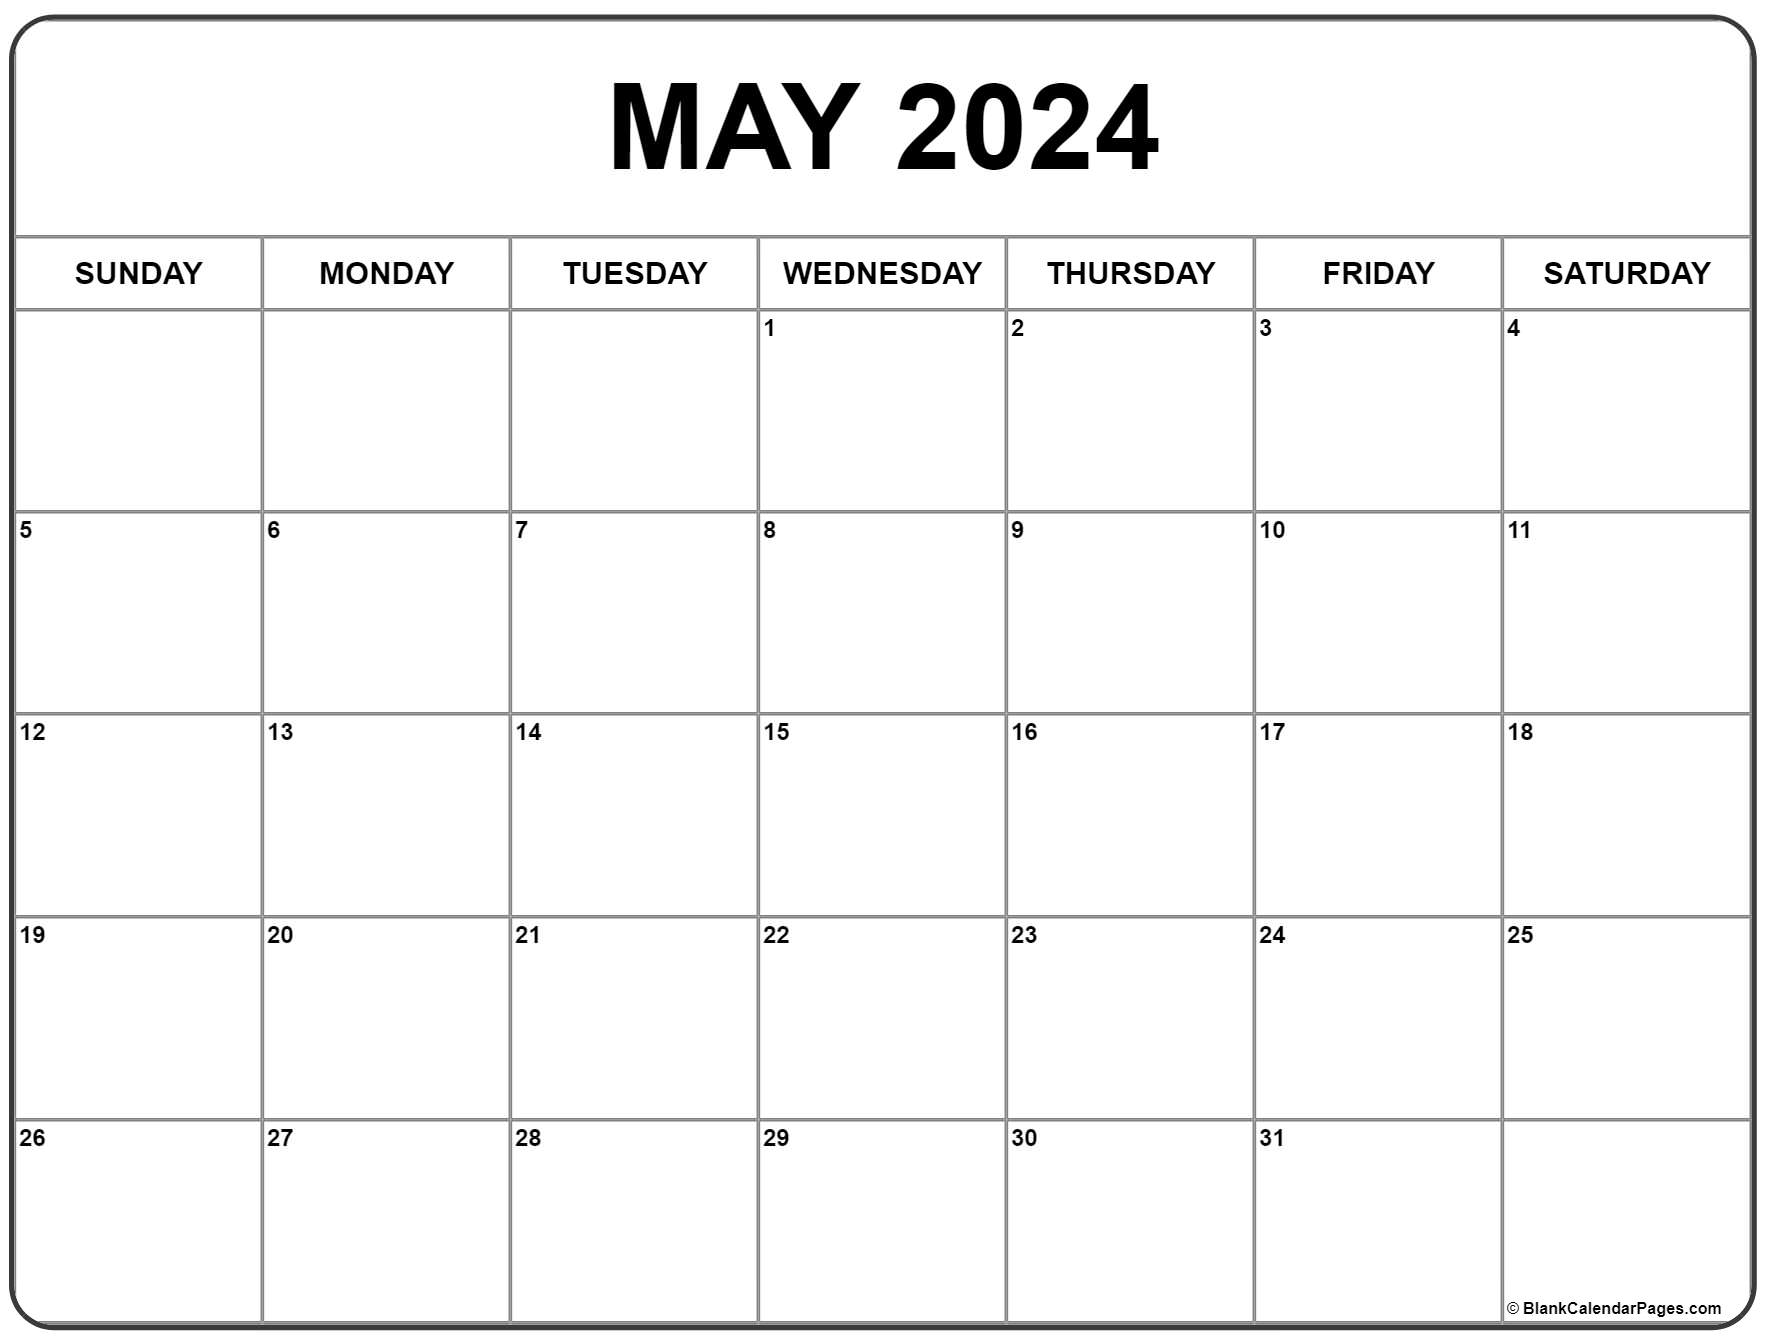 May 2024 Calendar | Free Printable Calendar for May 2024 Free Printable Calendar